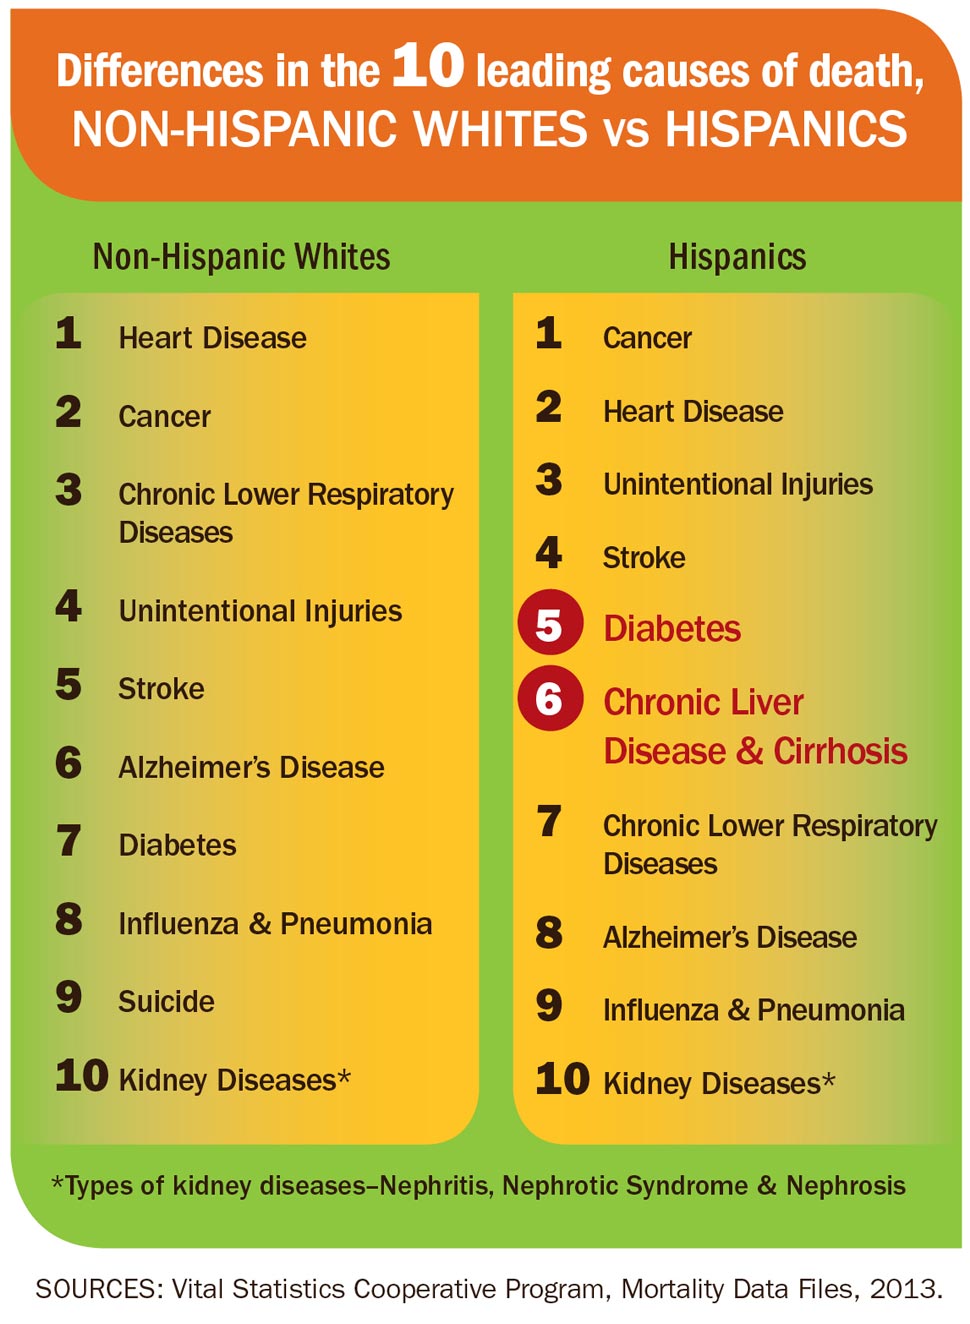 Differences in the 10 leading causes of death, NON-HISPANIC WHITES vs HISPANICS